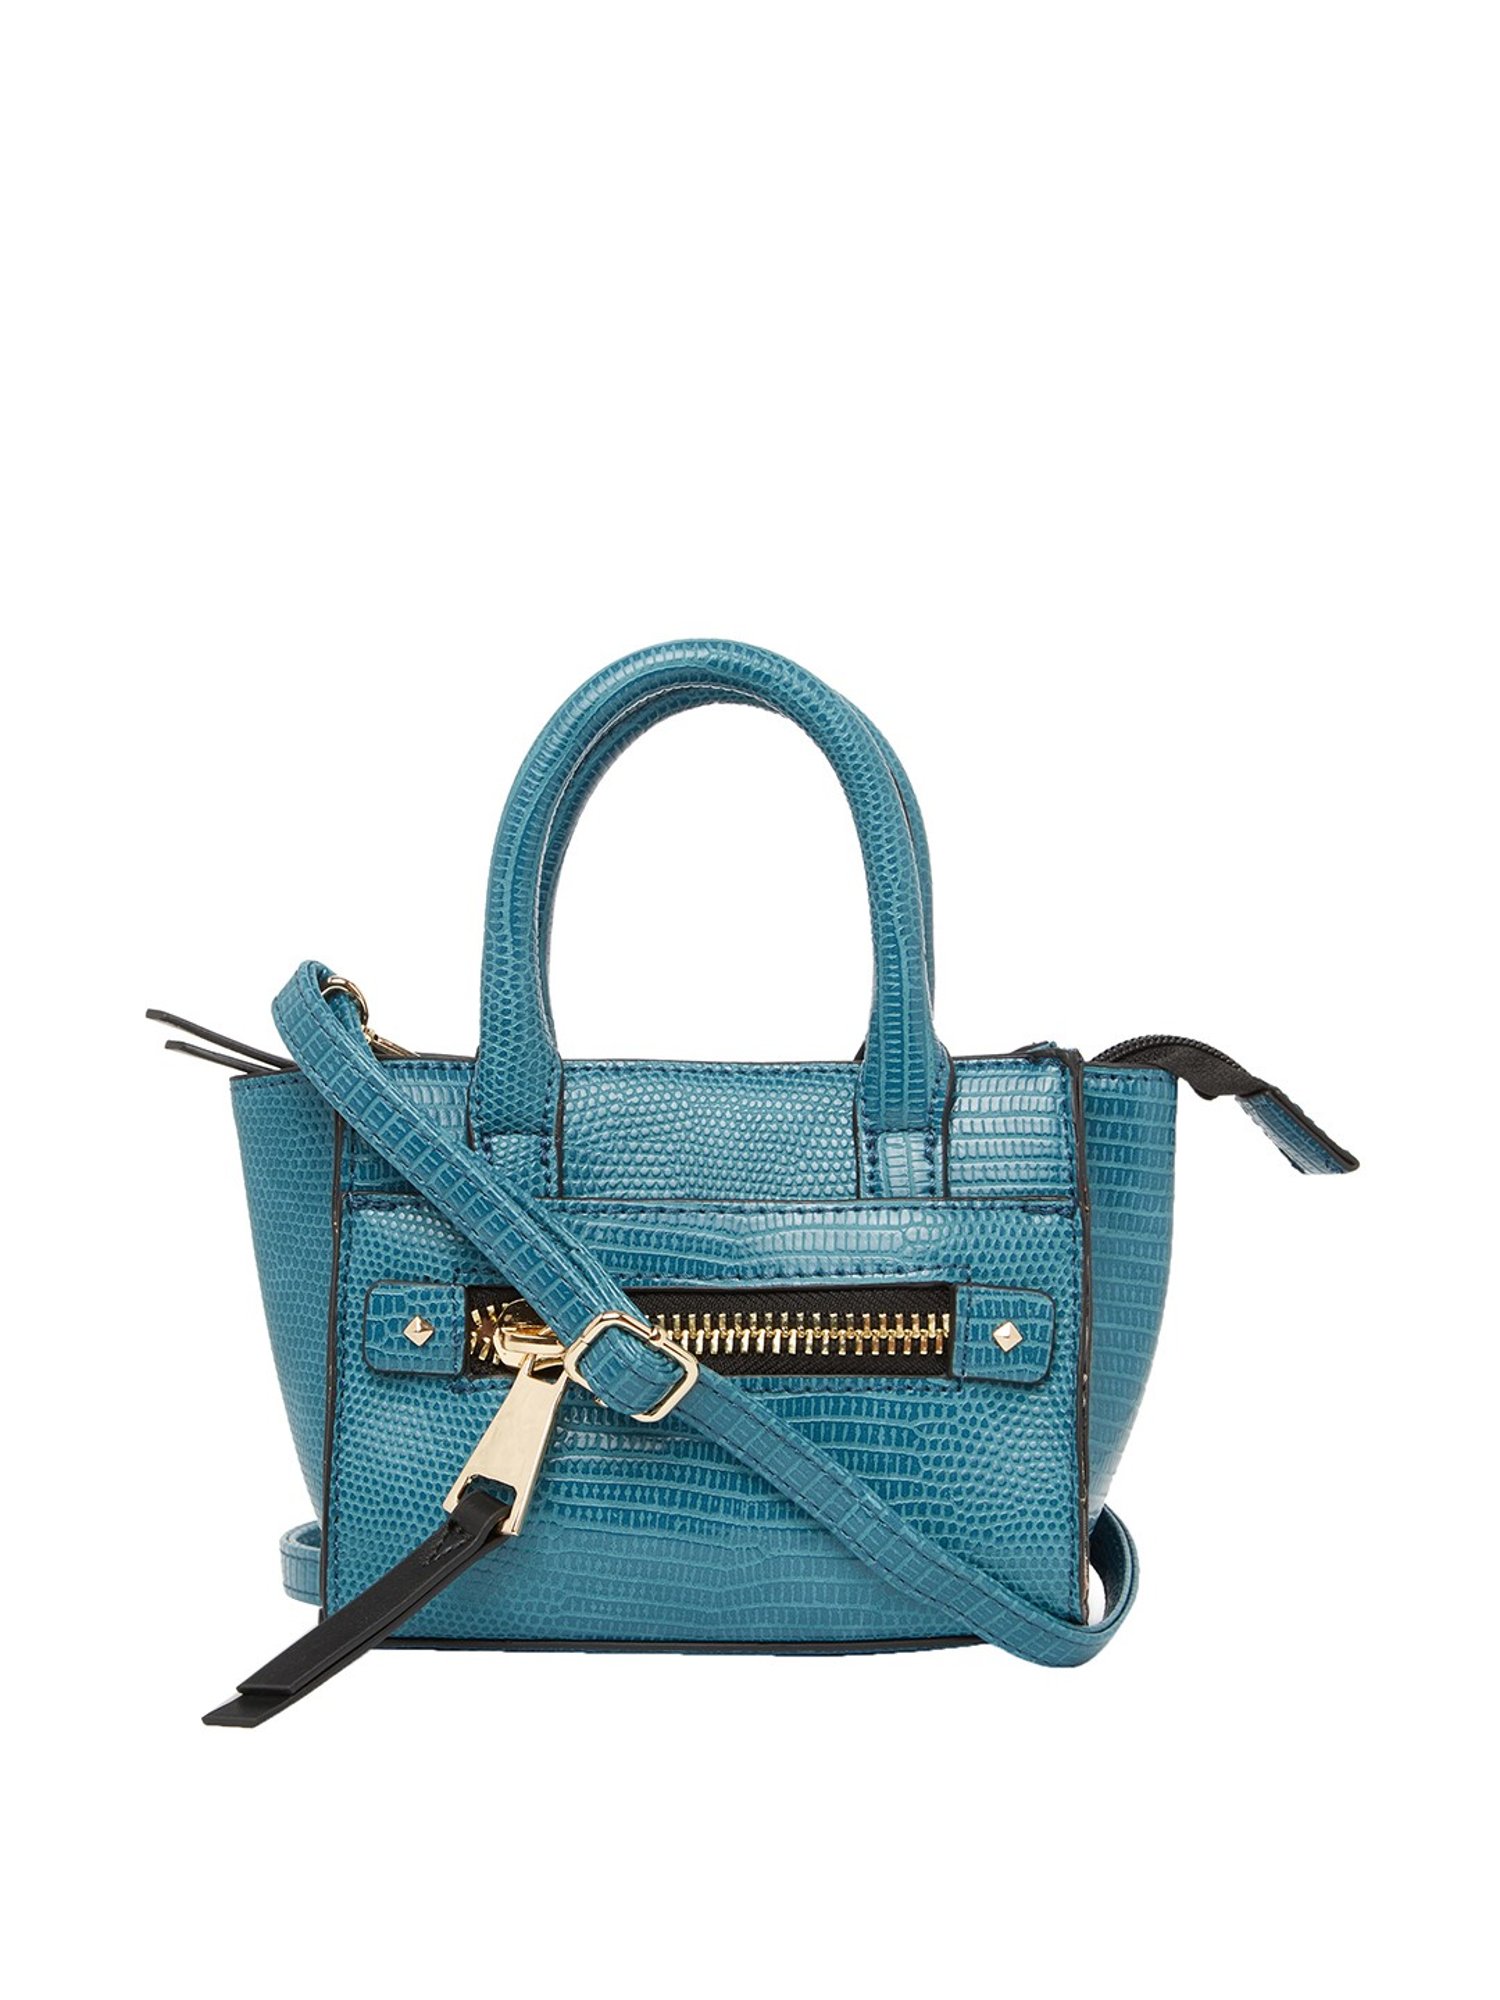 Small Blue Handbags